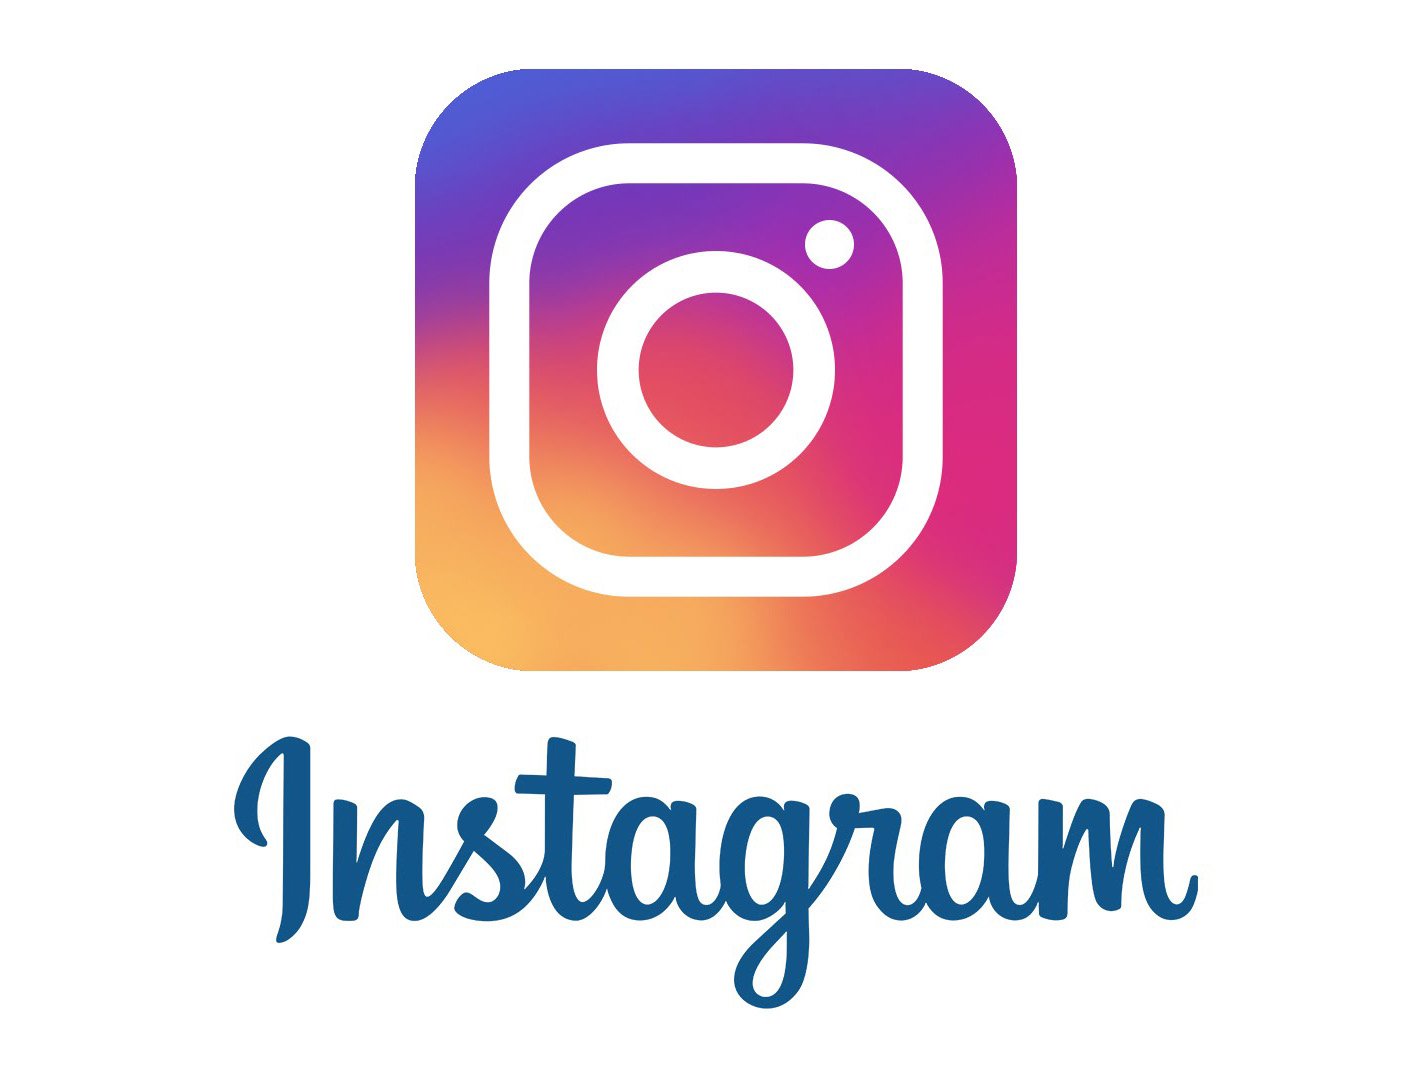 Last Check Instagram Account